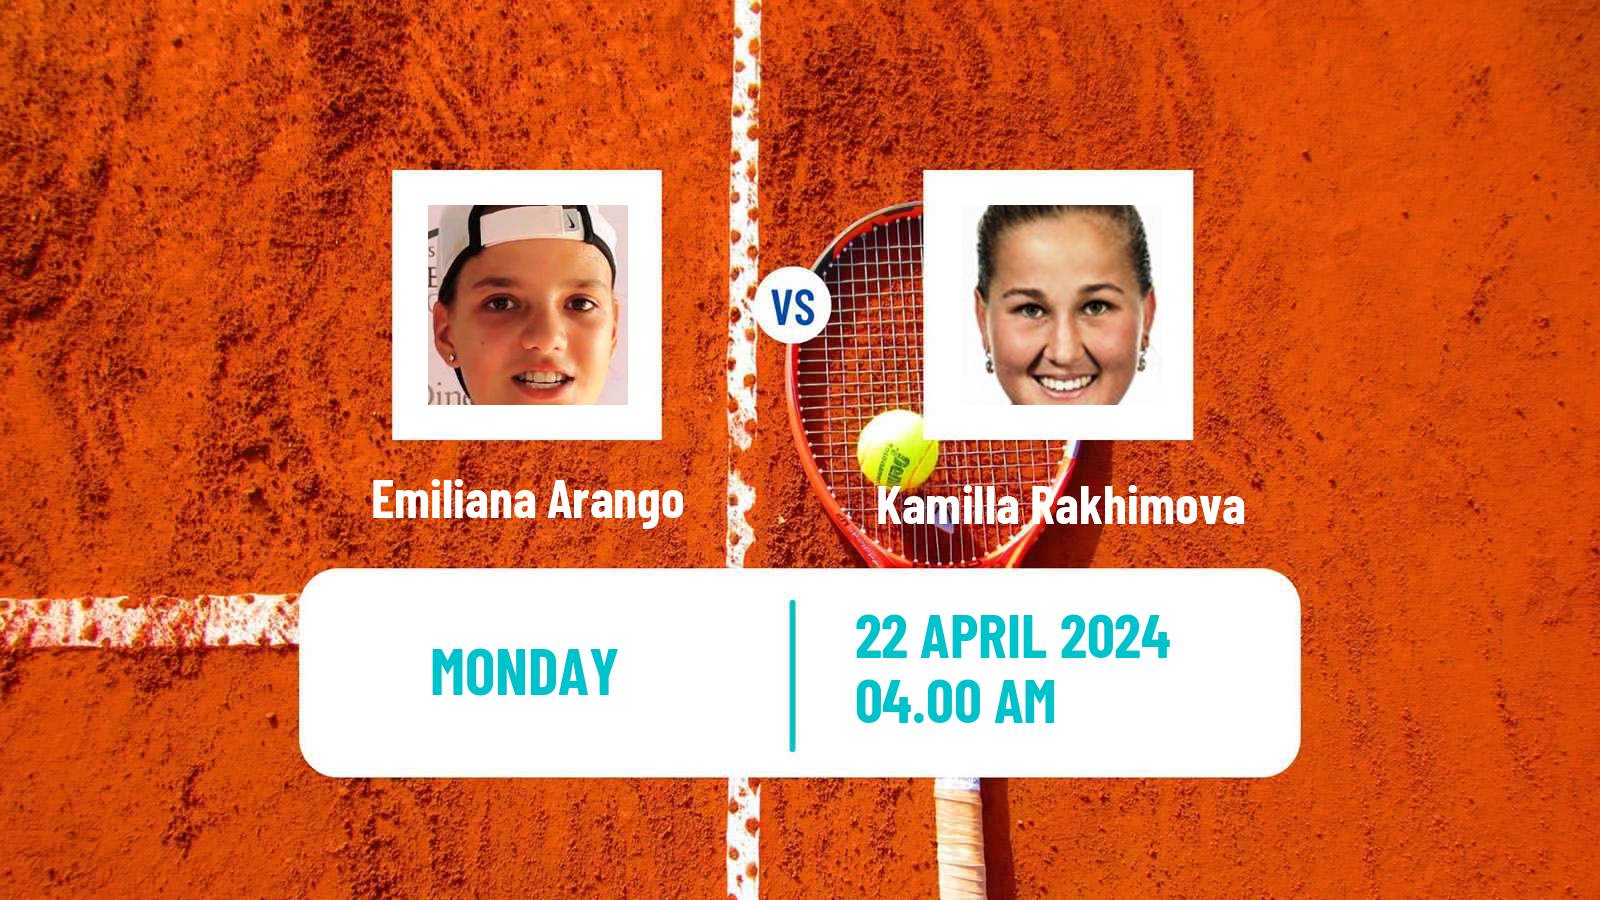 Tennis WTA Madrid Emiliana Arango - Kamilla Rakhimova